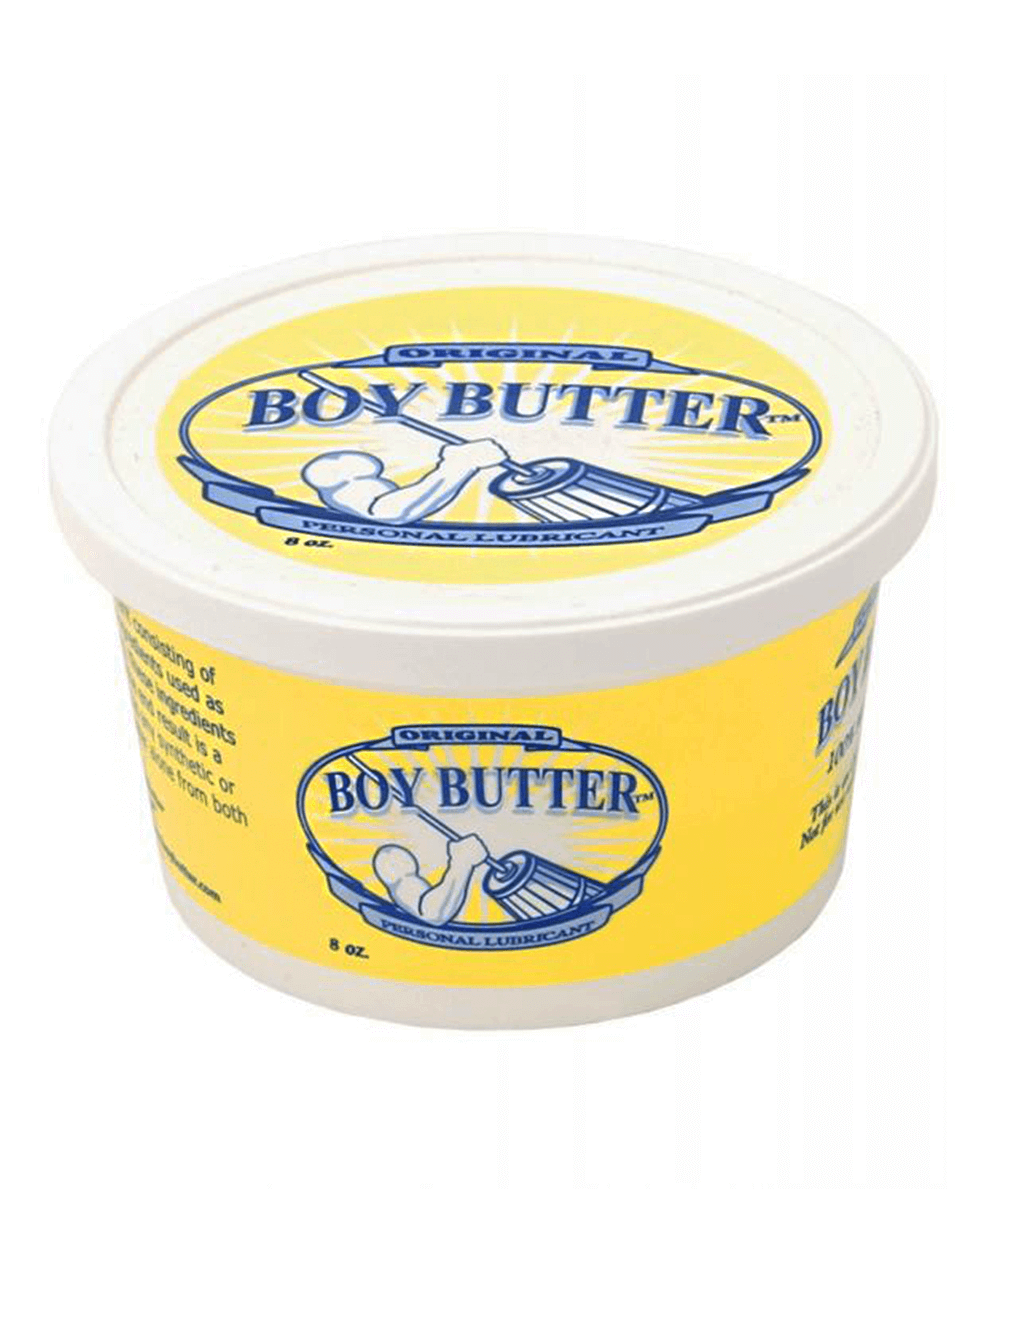 Boy Butter Original Tub